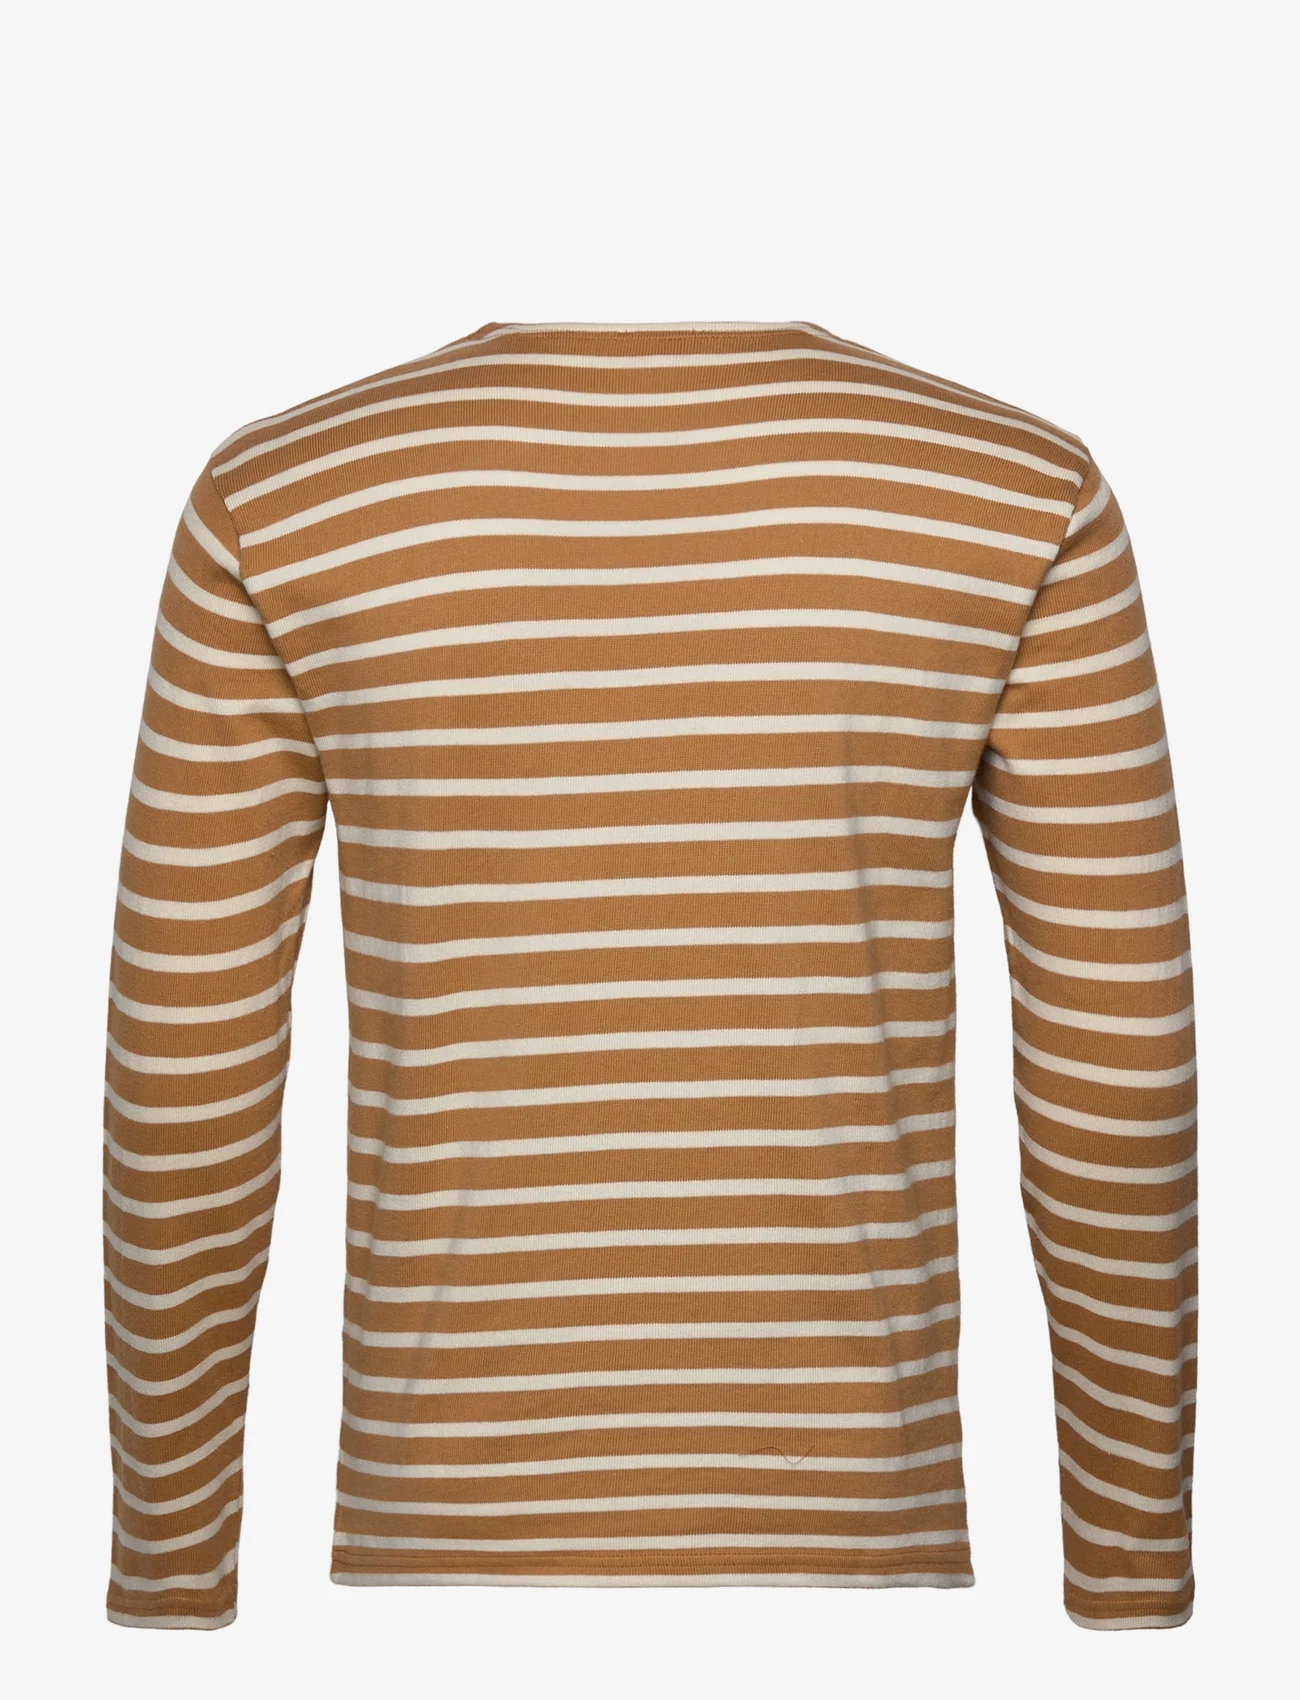 Armor Lux - Striped Breton Shirt Héritage - langærmede t-shirts - cajou/nature - 1